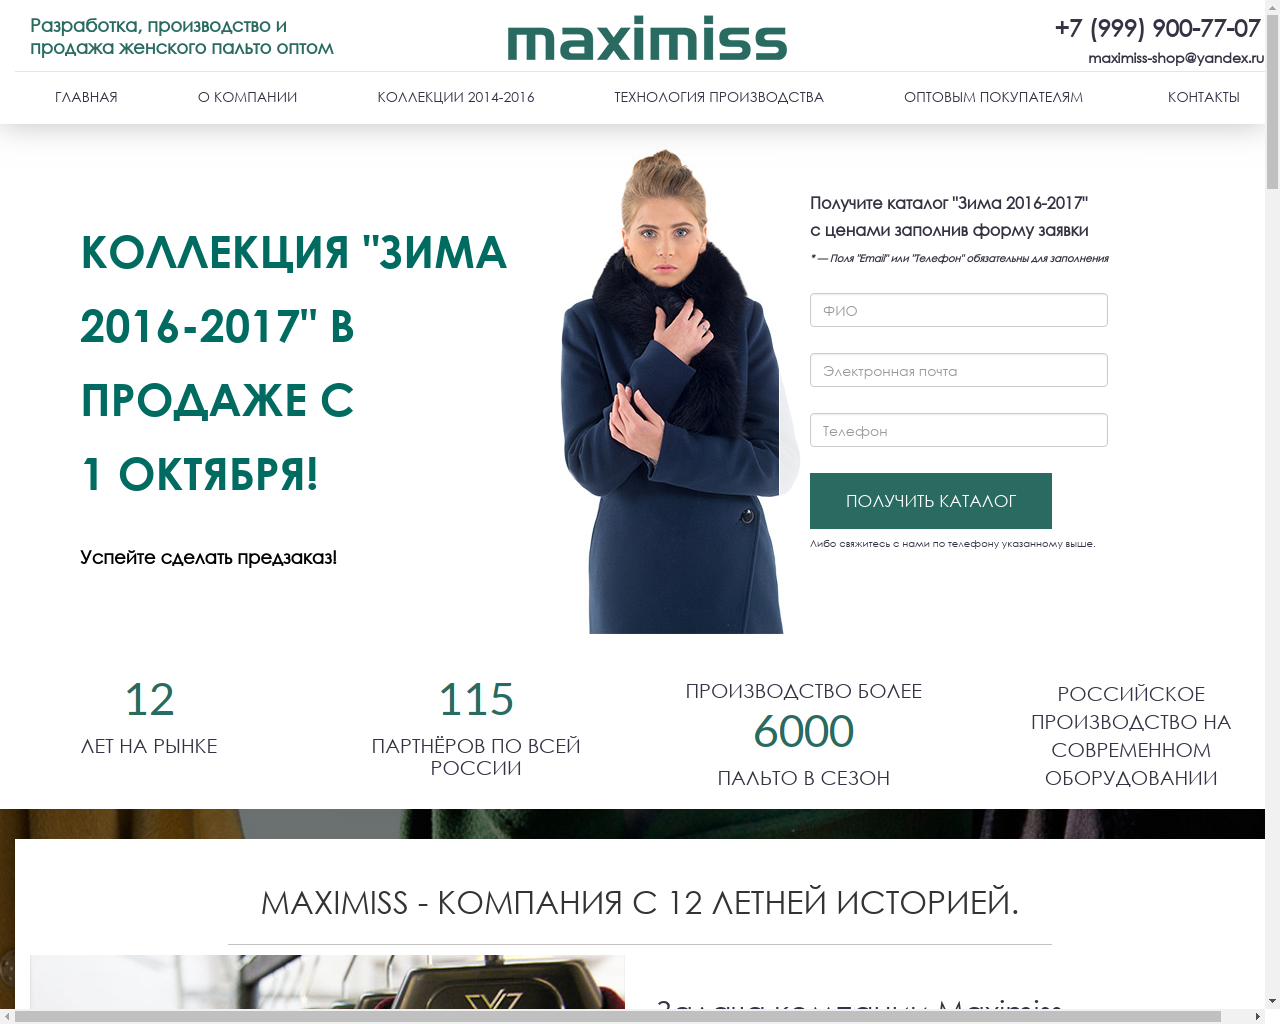 Изображение сайта maximiss.ru в разрешении 1280x1024